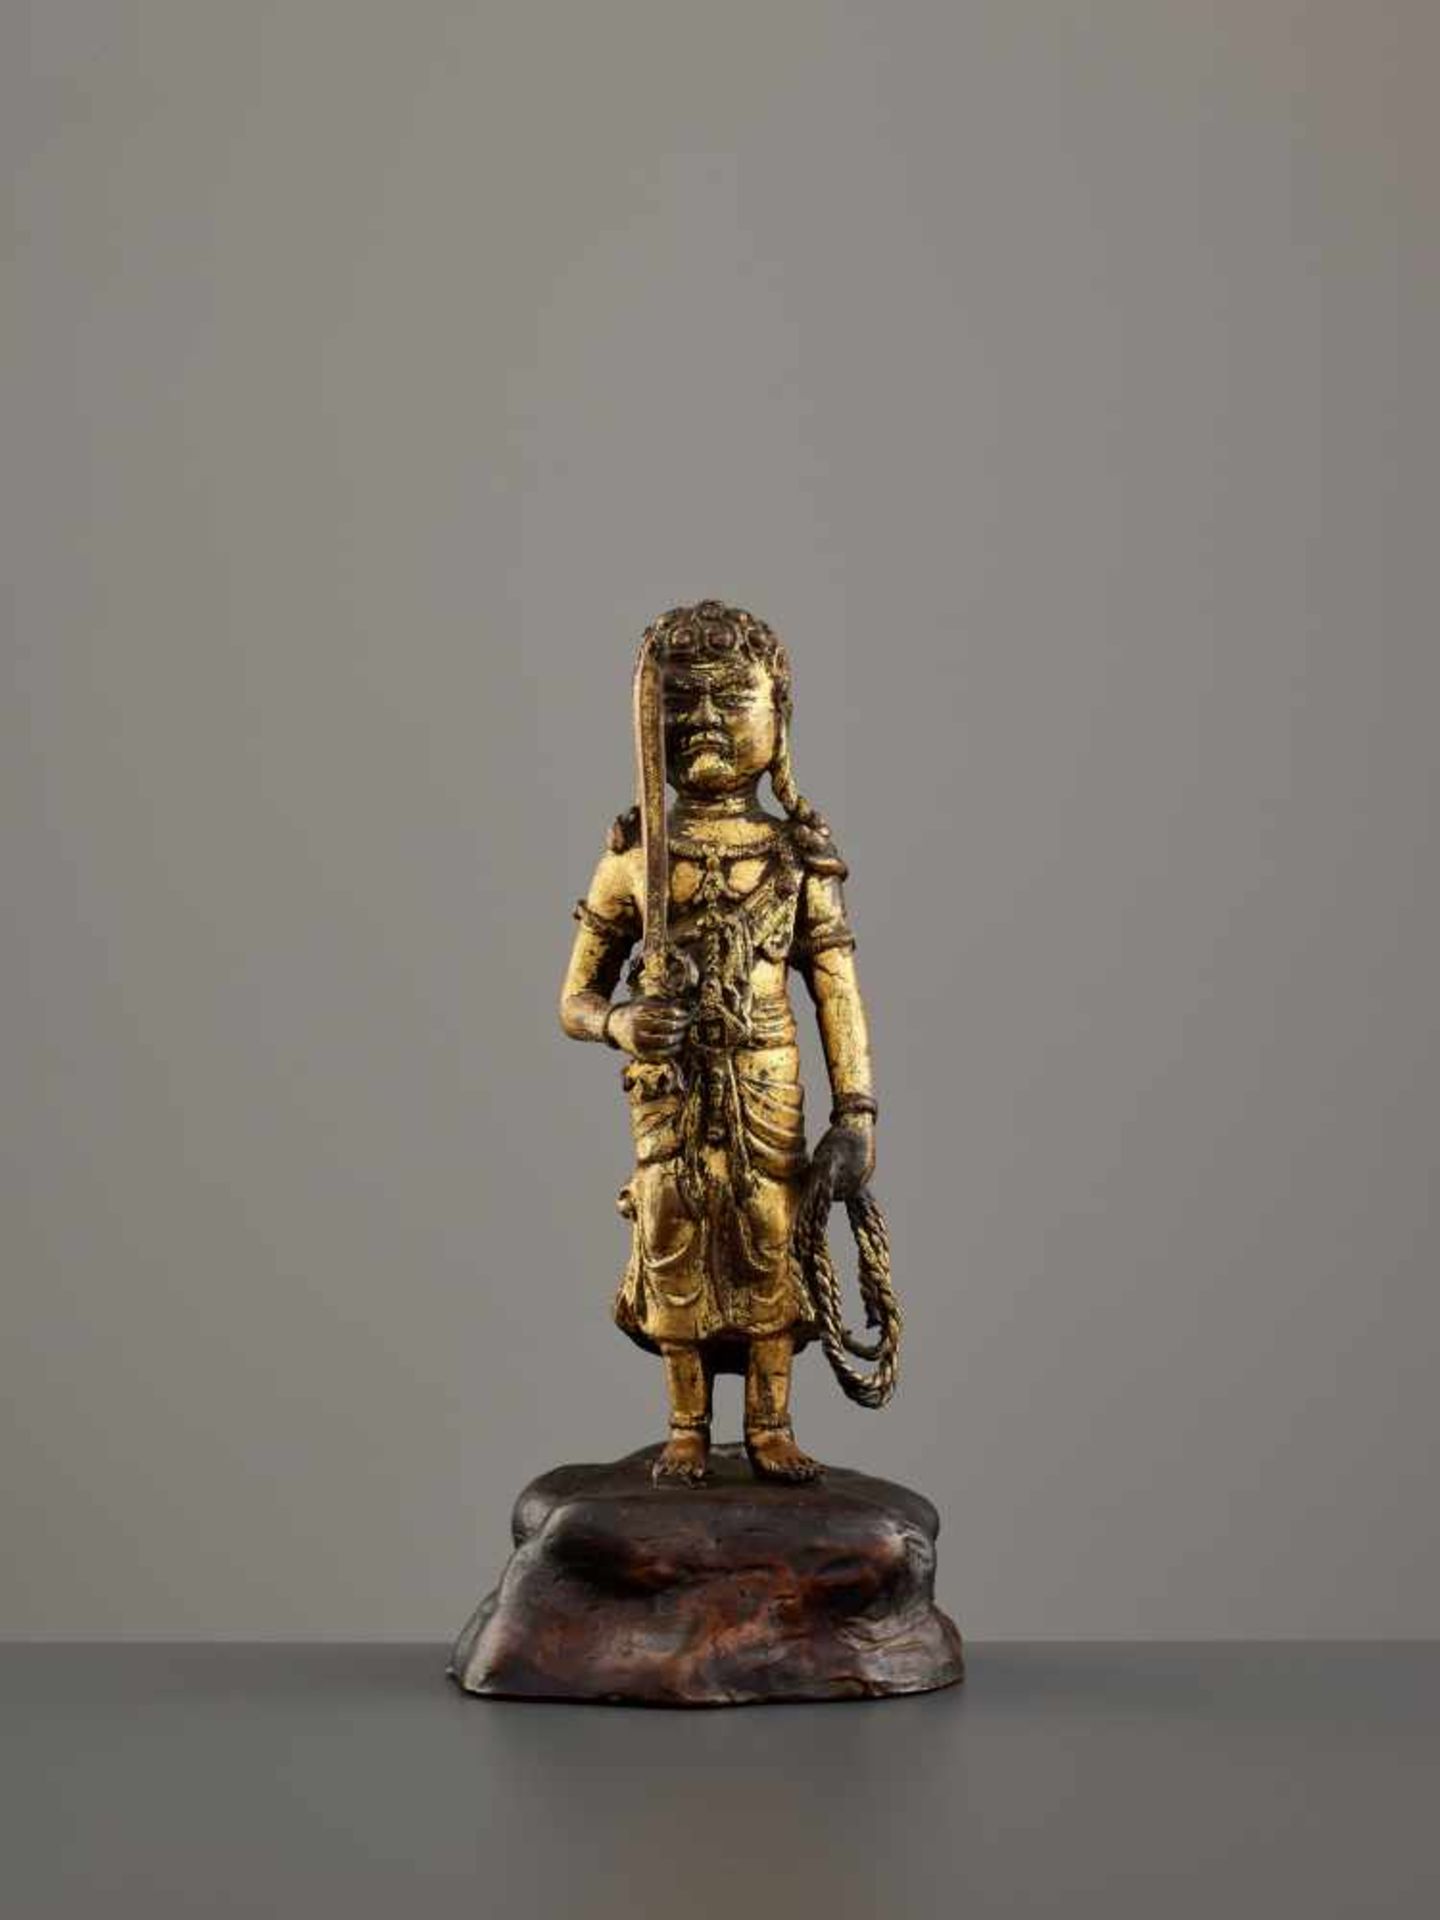 A RARE LACQUER GILT 18th CENTURY BRONZE OF FUDO MYO-O (ACALA)Lacquer gilt bronzeJapan, 18th century,